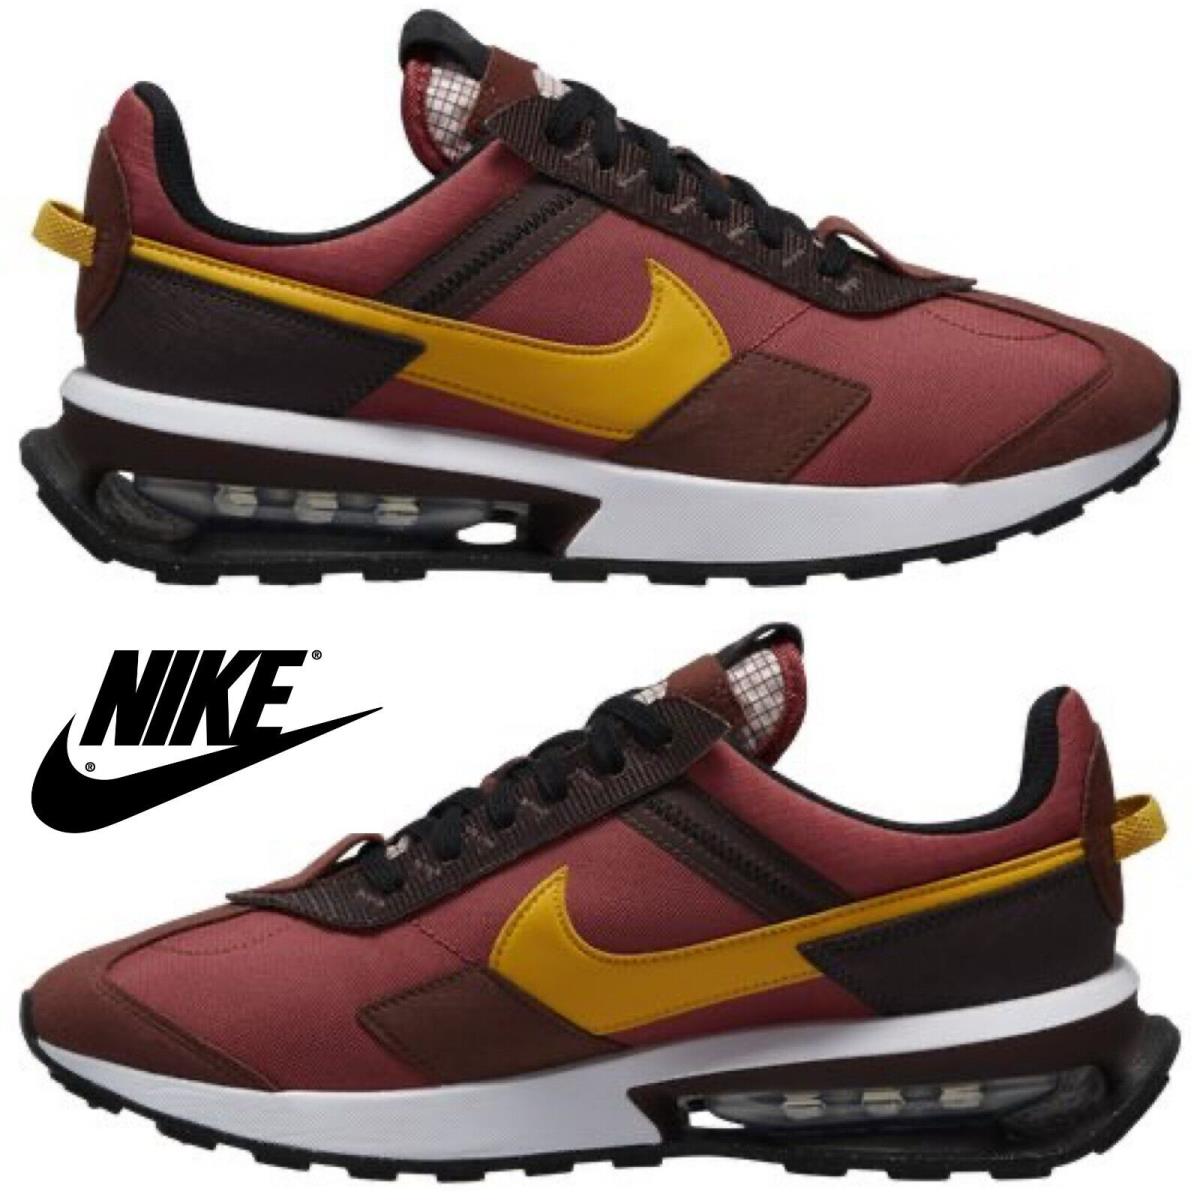 Nike Air Max Pre-day Men`s Sneakers Comfort Casual Sport Shoes Brown Black